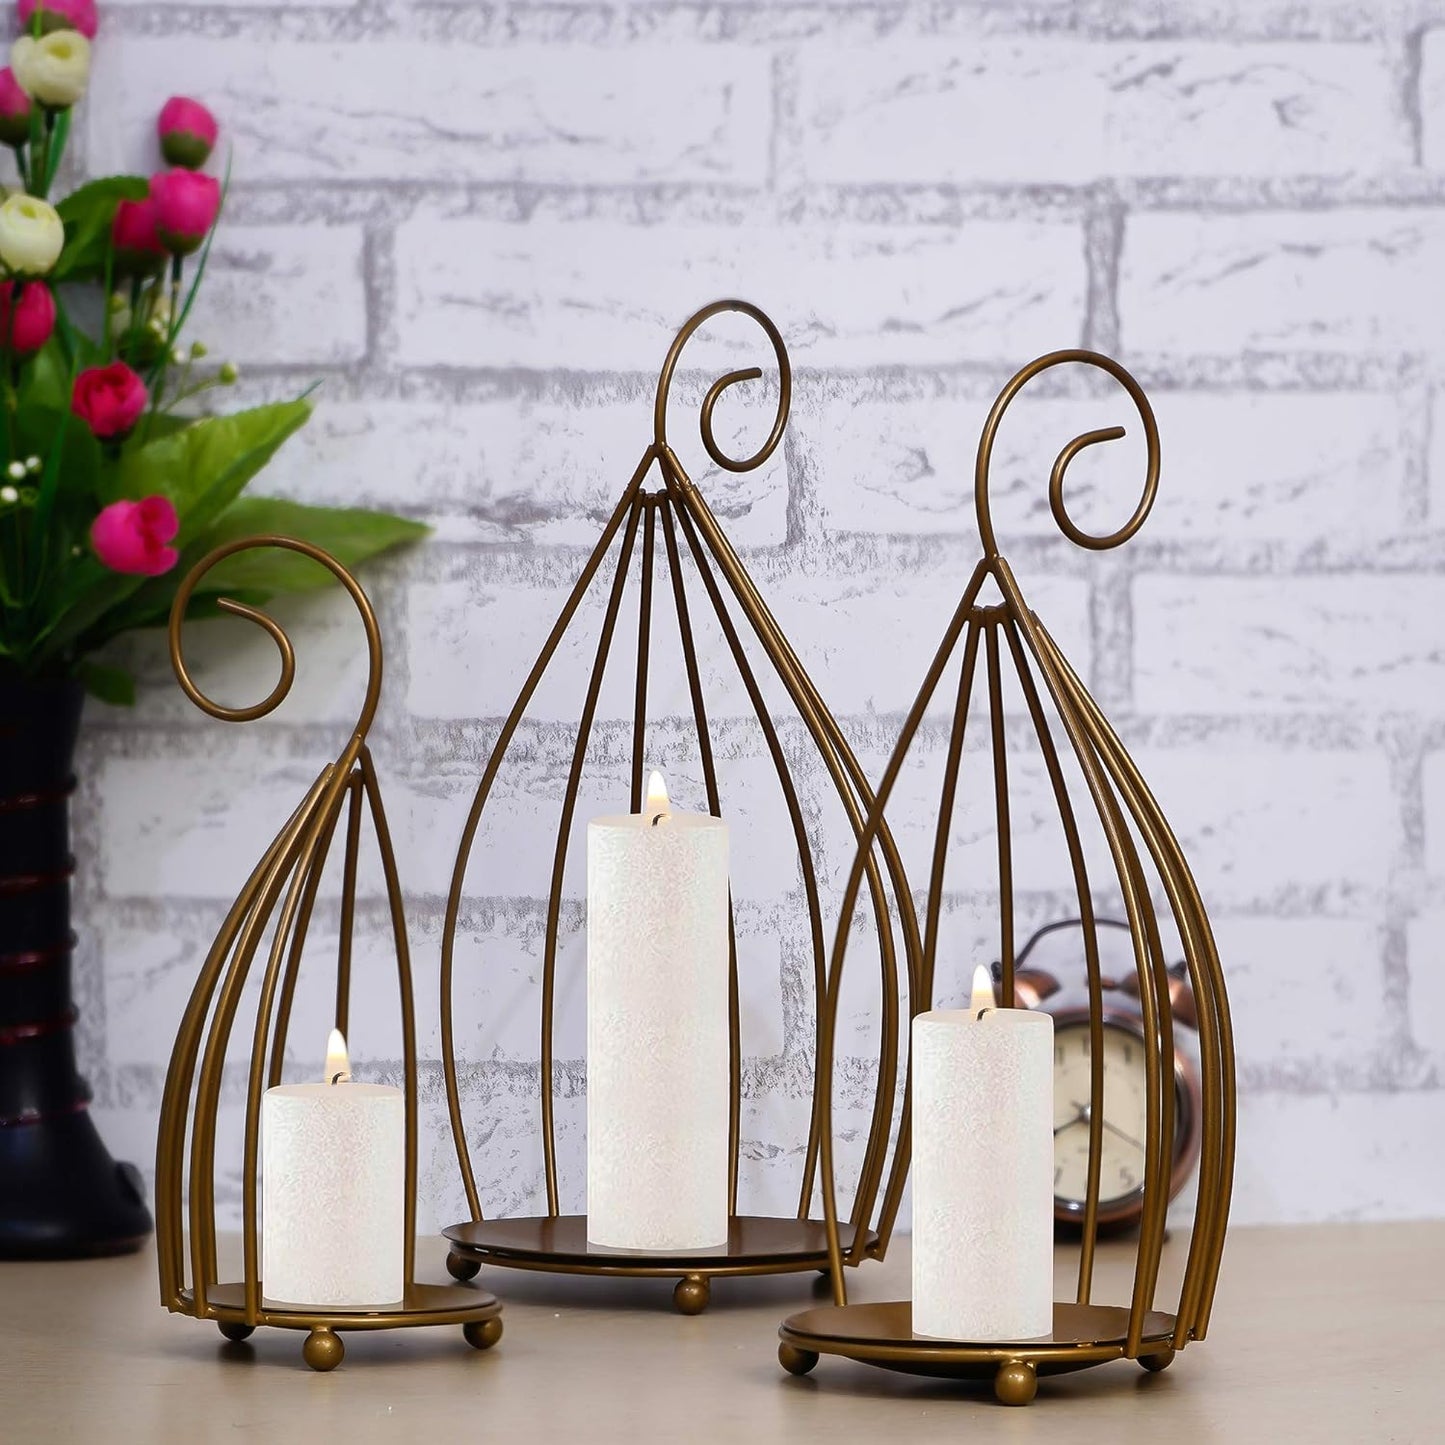 Bird Cage Design Tea Light Candle Holder - Set of 3